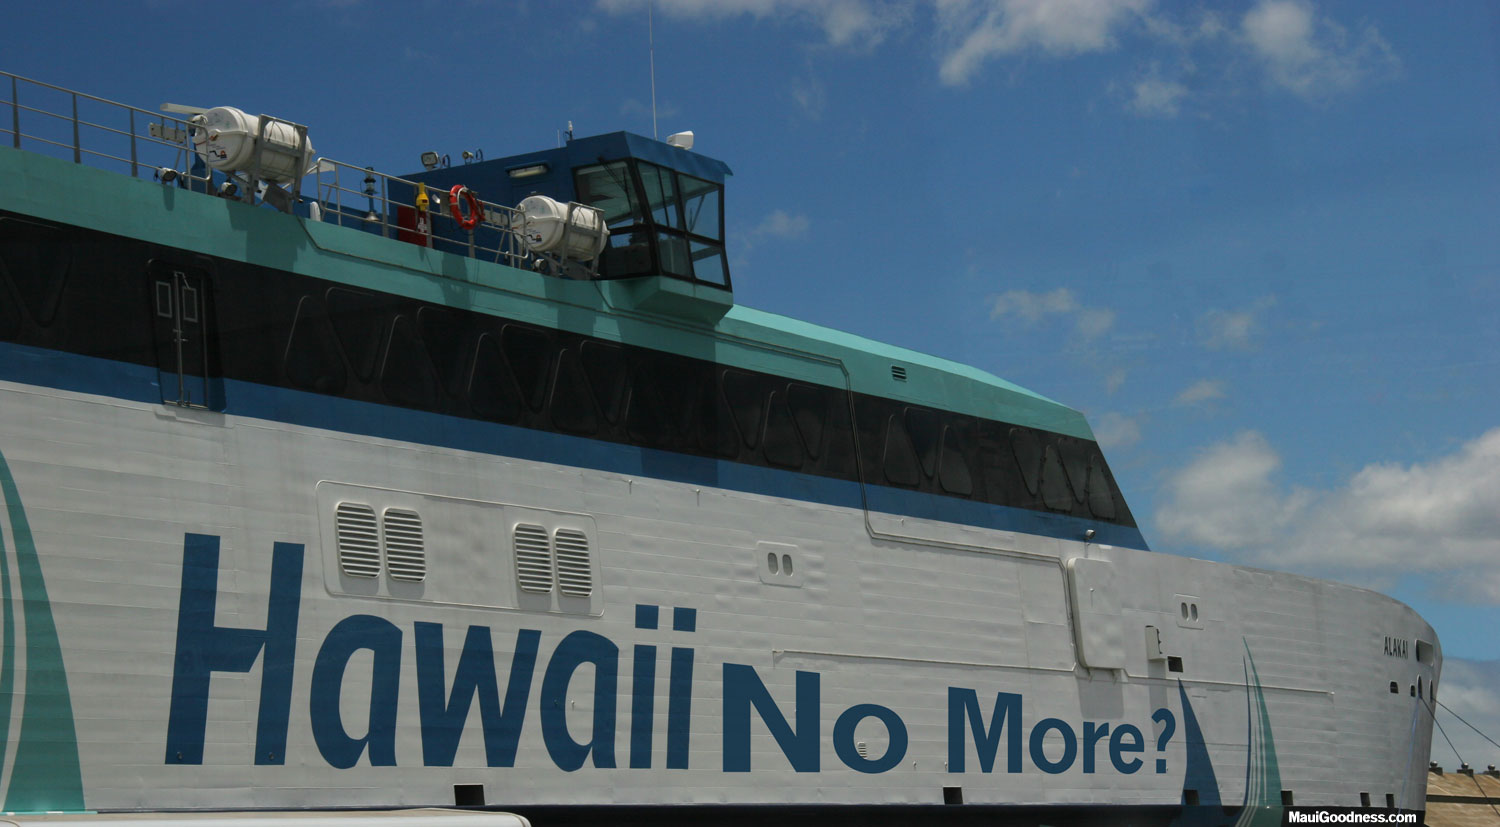 Hawaii Navy Restricted Sea Areas